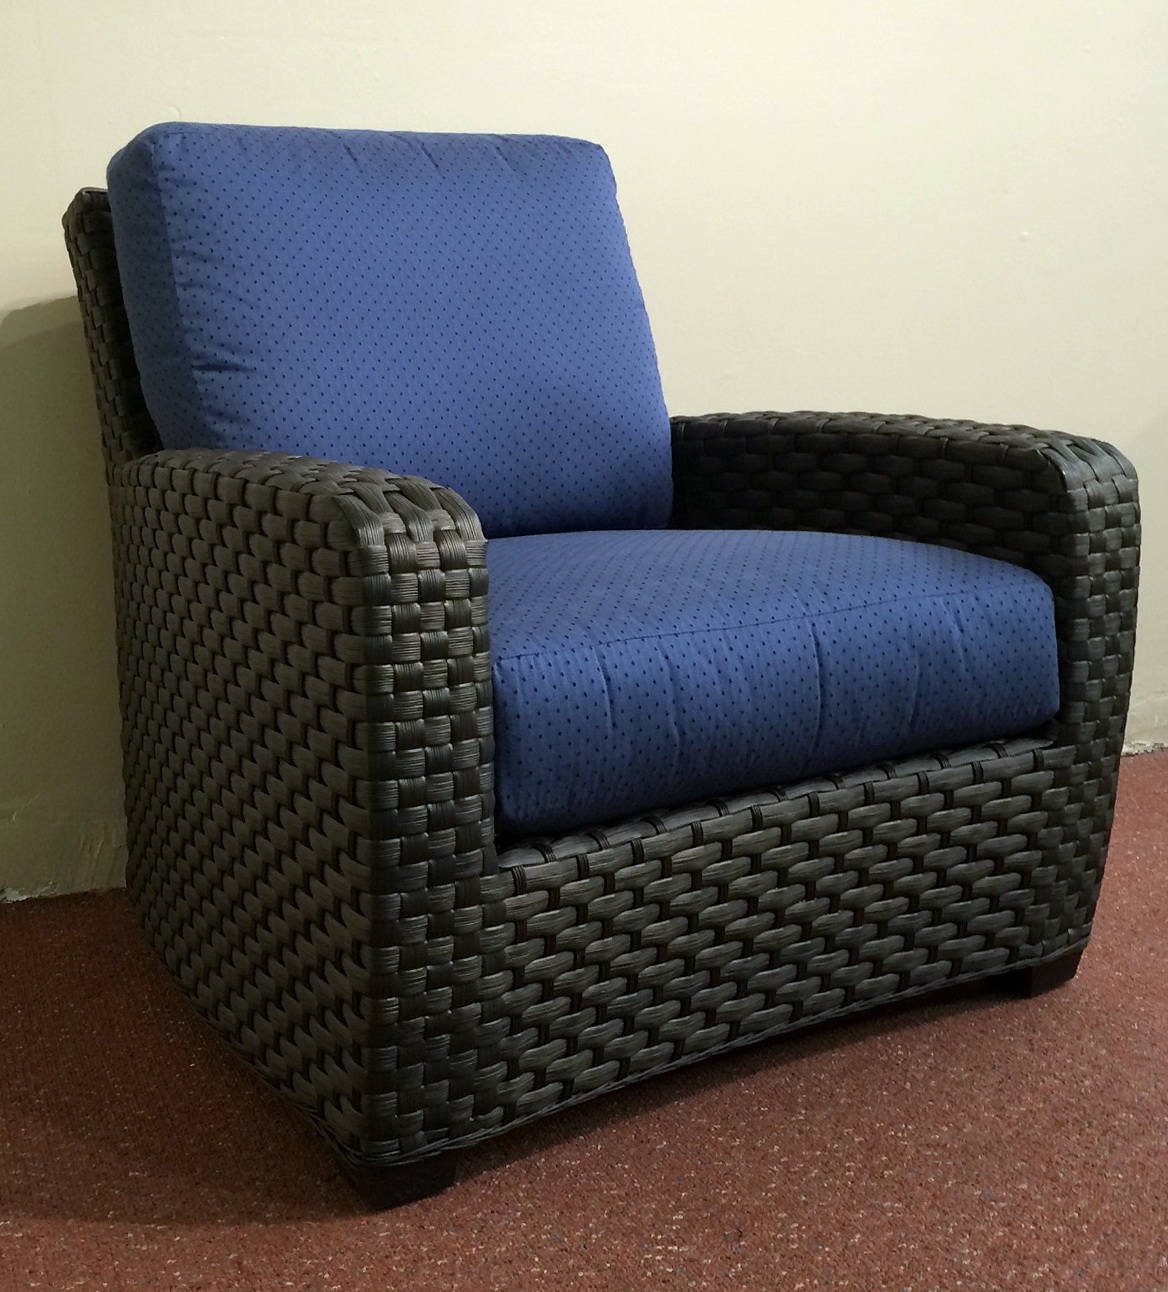 Outdoor Wicker Chair Cushions Clearance | Home Design Ideas